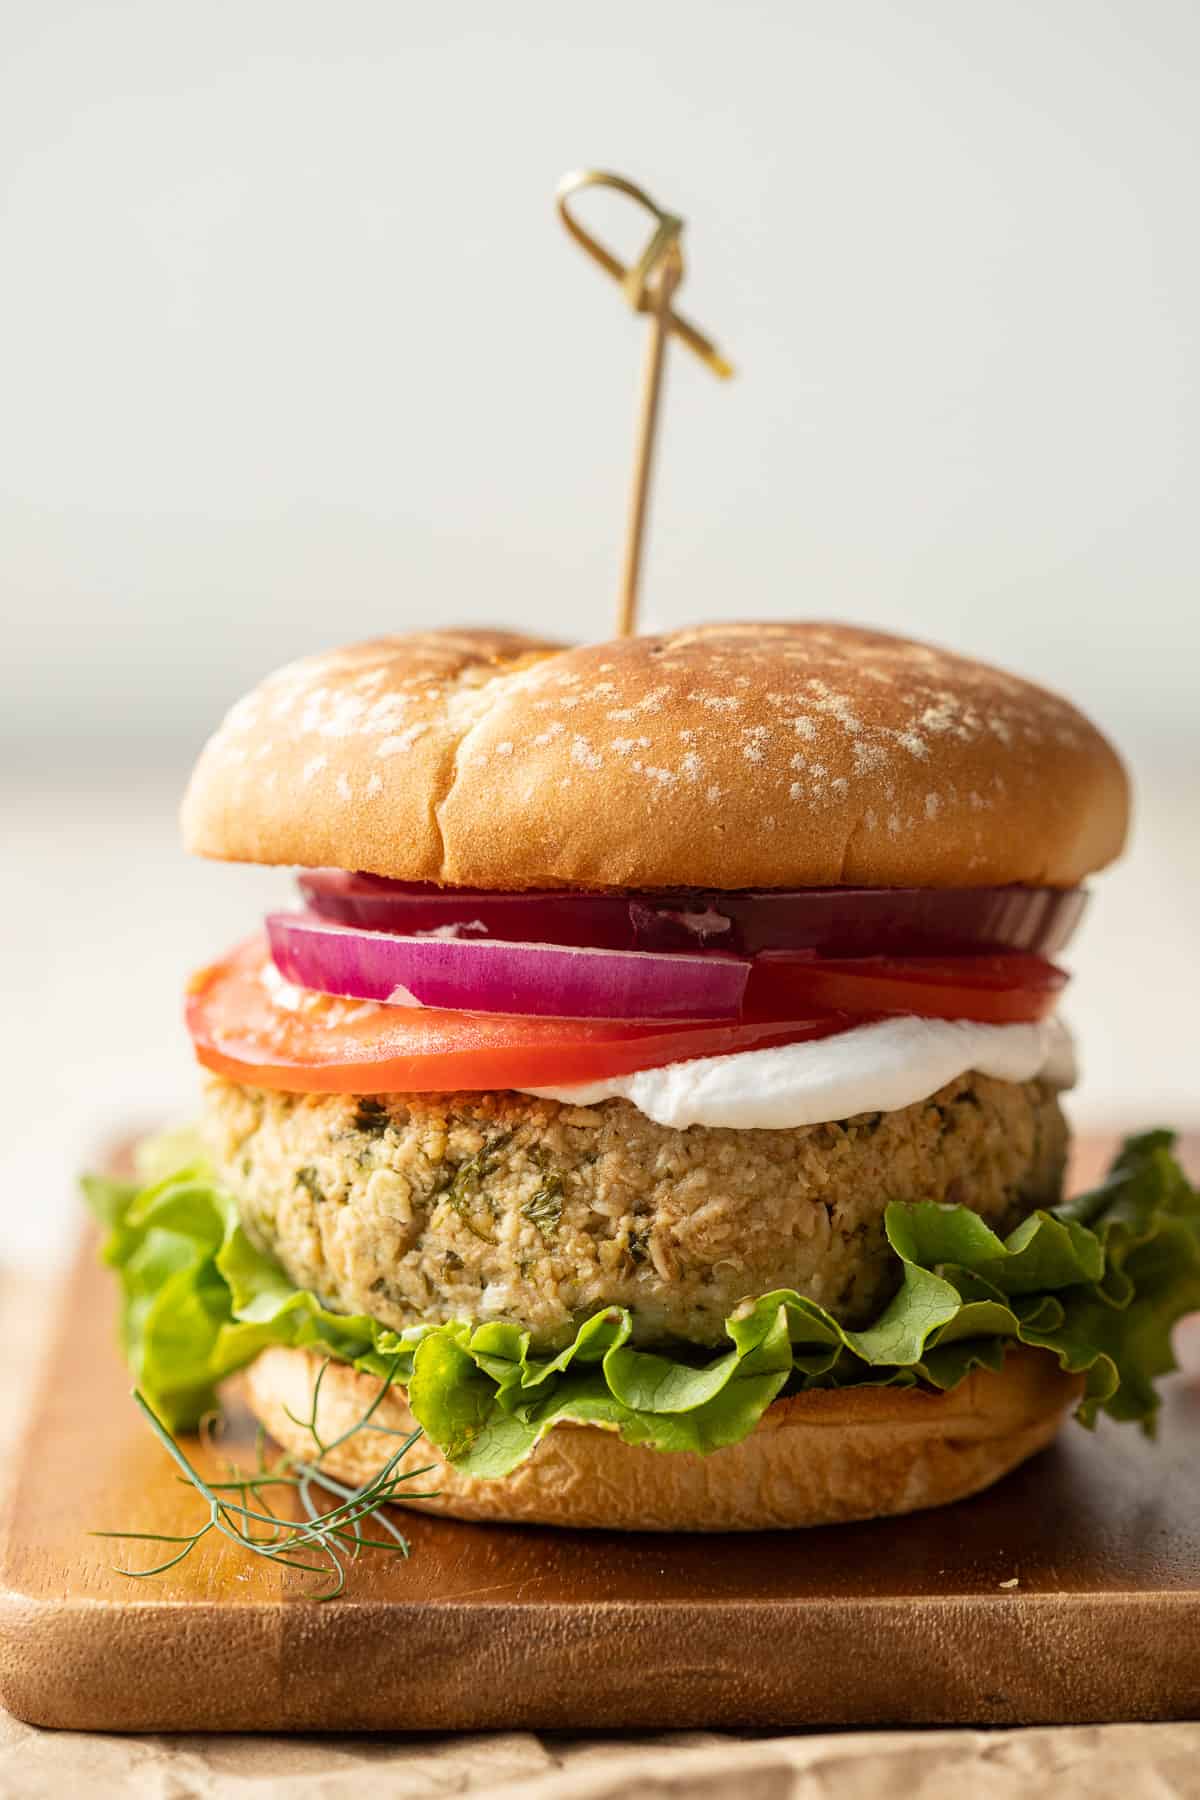 Falafel burger on a bun with lettuce, tomato, vegan yogurt, and onion slices.